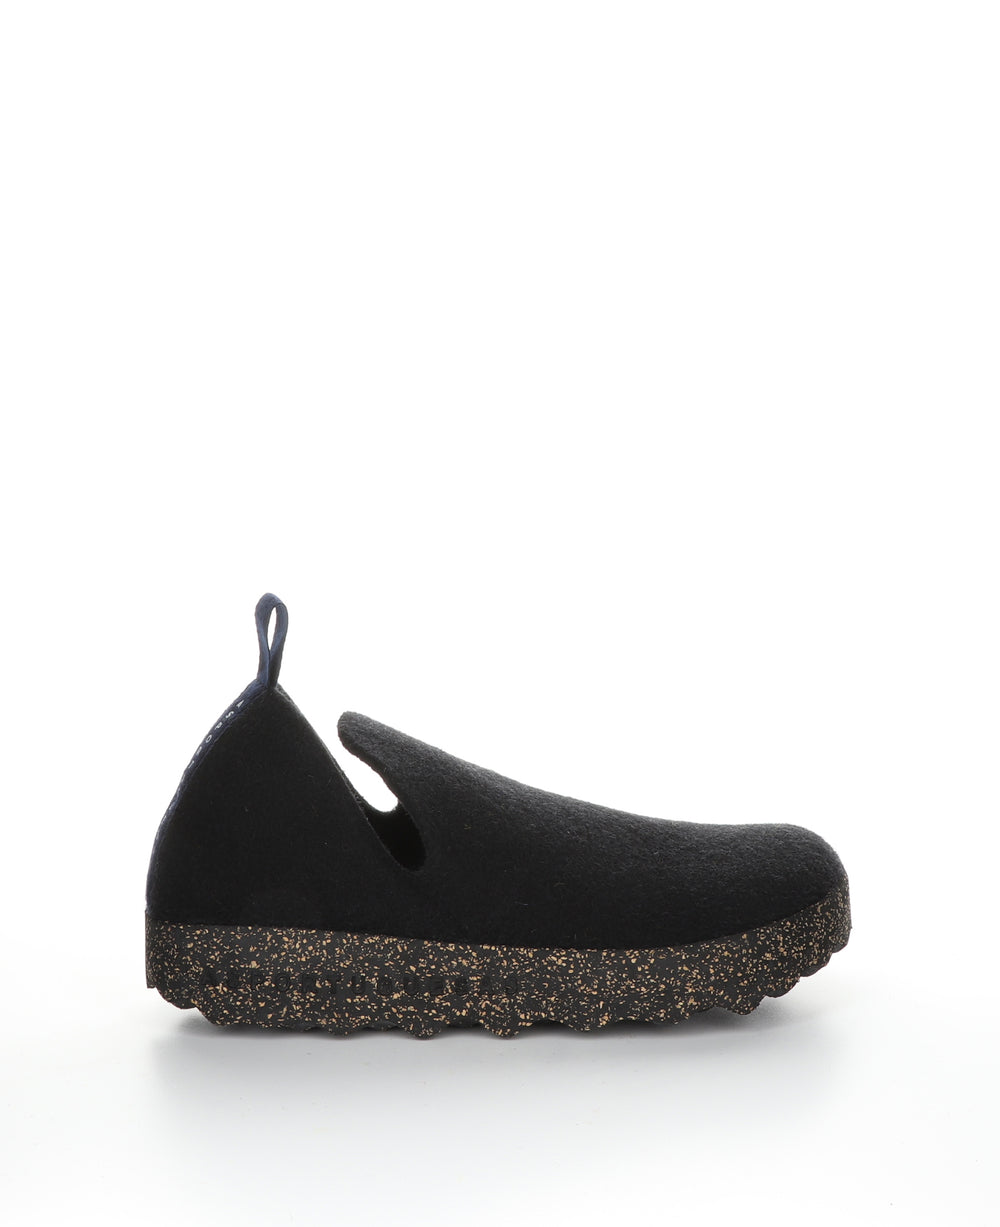 CITYM Black Round Toe Shoes|CITYM Chaussures à Bout Rond in Noir